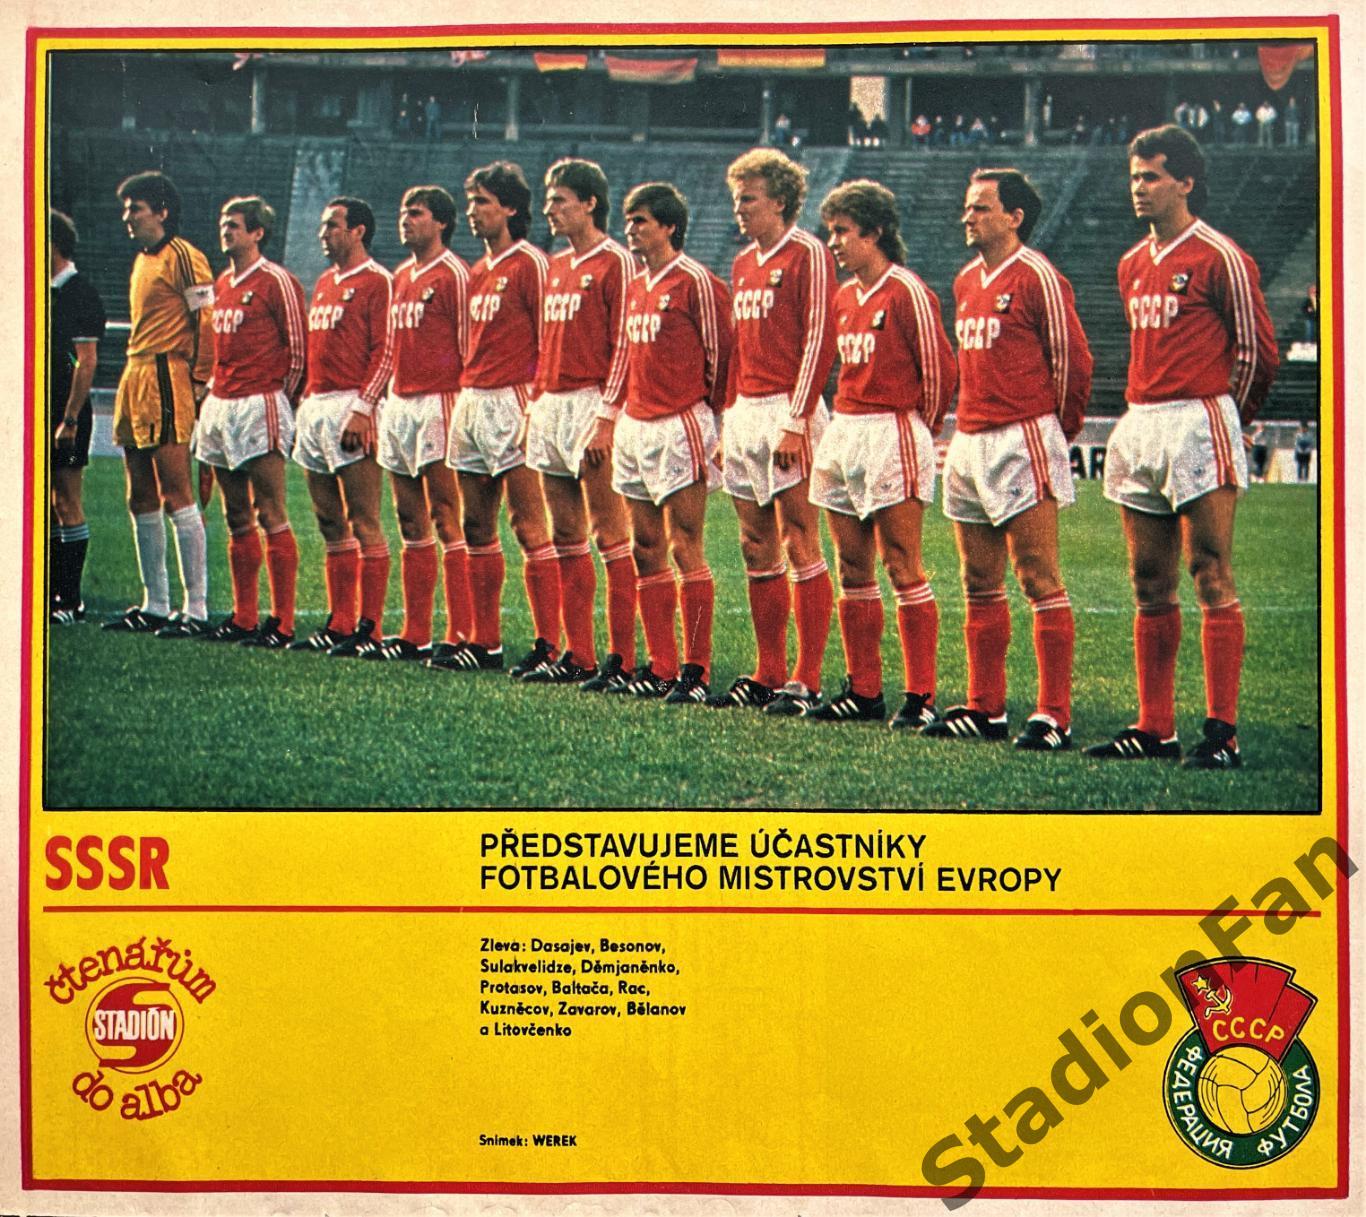 Постер из журнала Стадион (Stadion) - SSSR, 1988